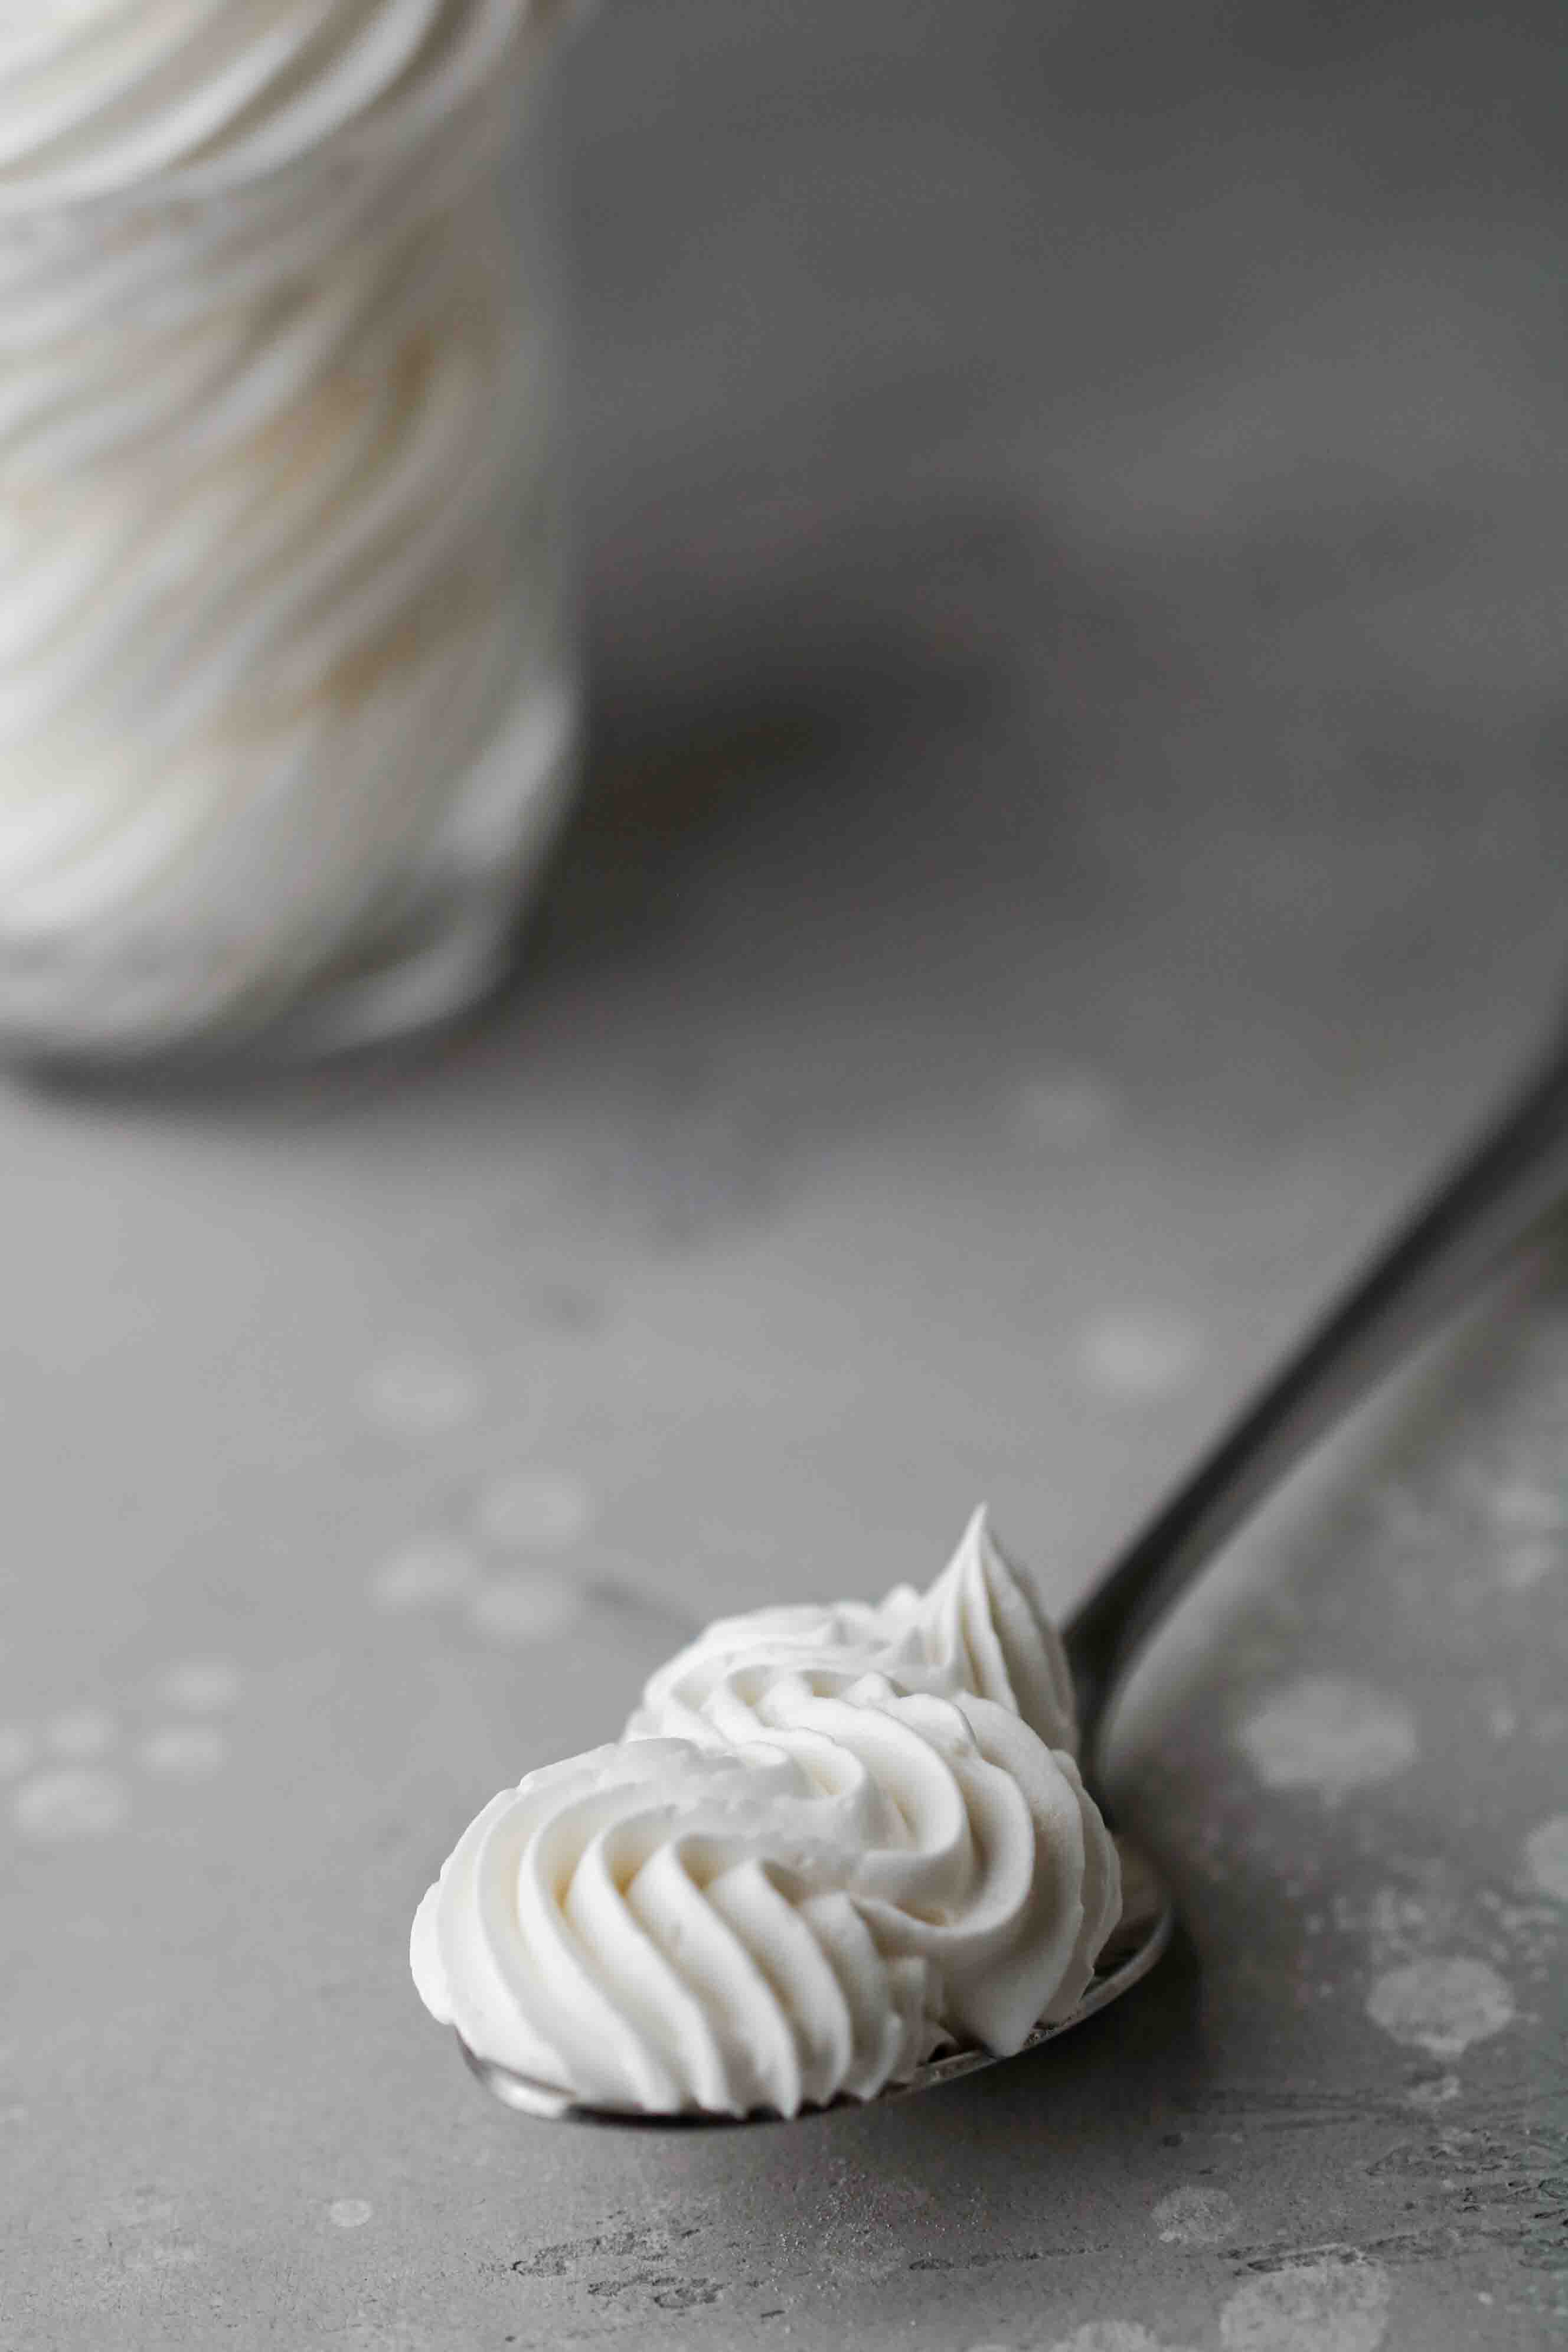 Piped Swiss meringue buttercream